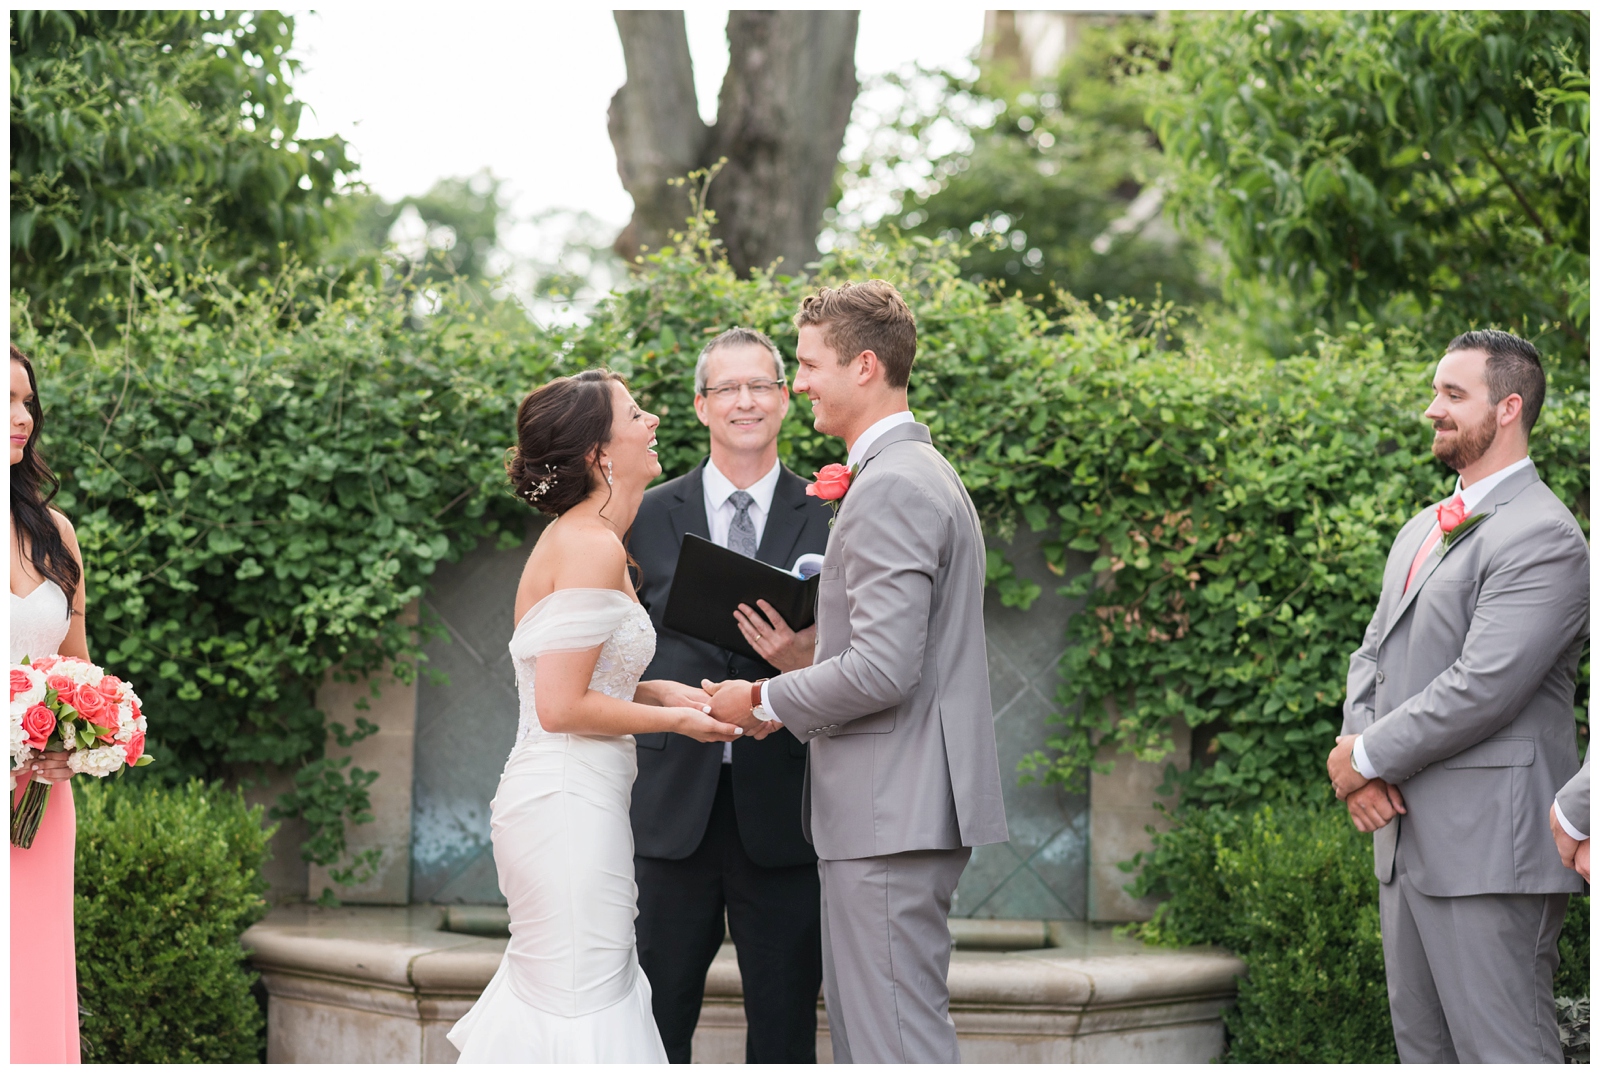 bride and groom laugh together during vow exchange at Franklin Park Conservatory garden wedding